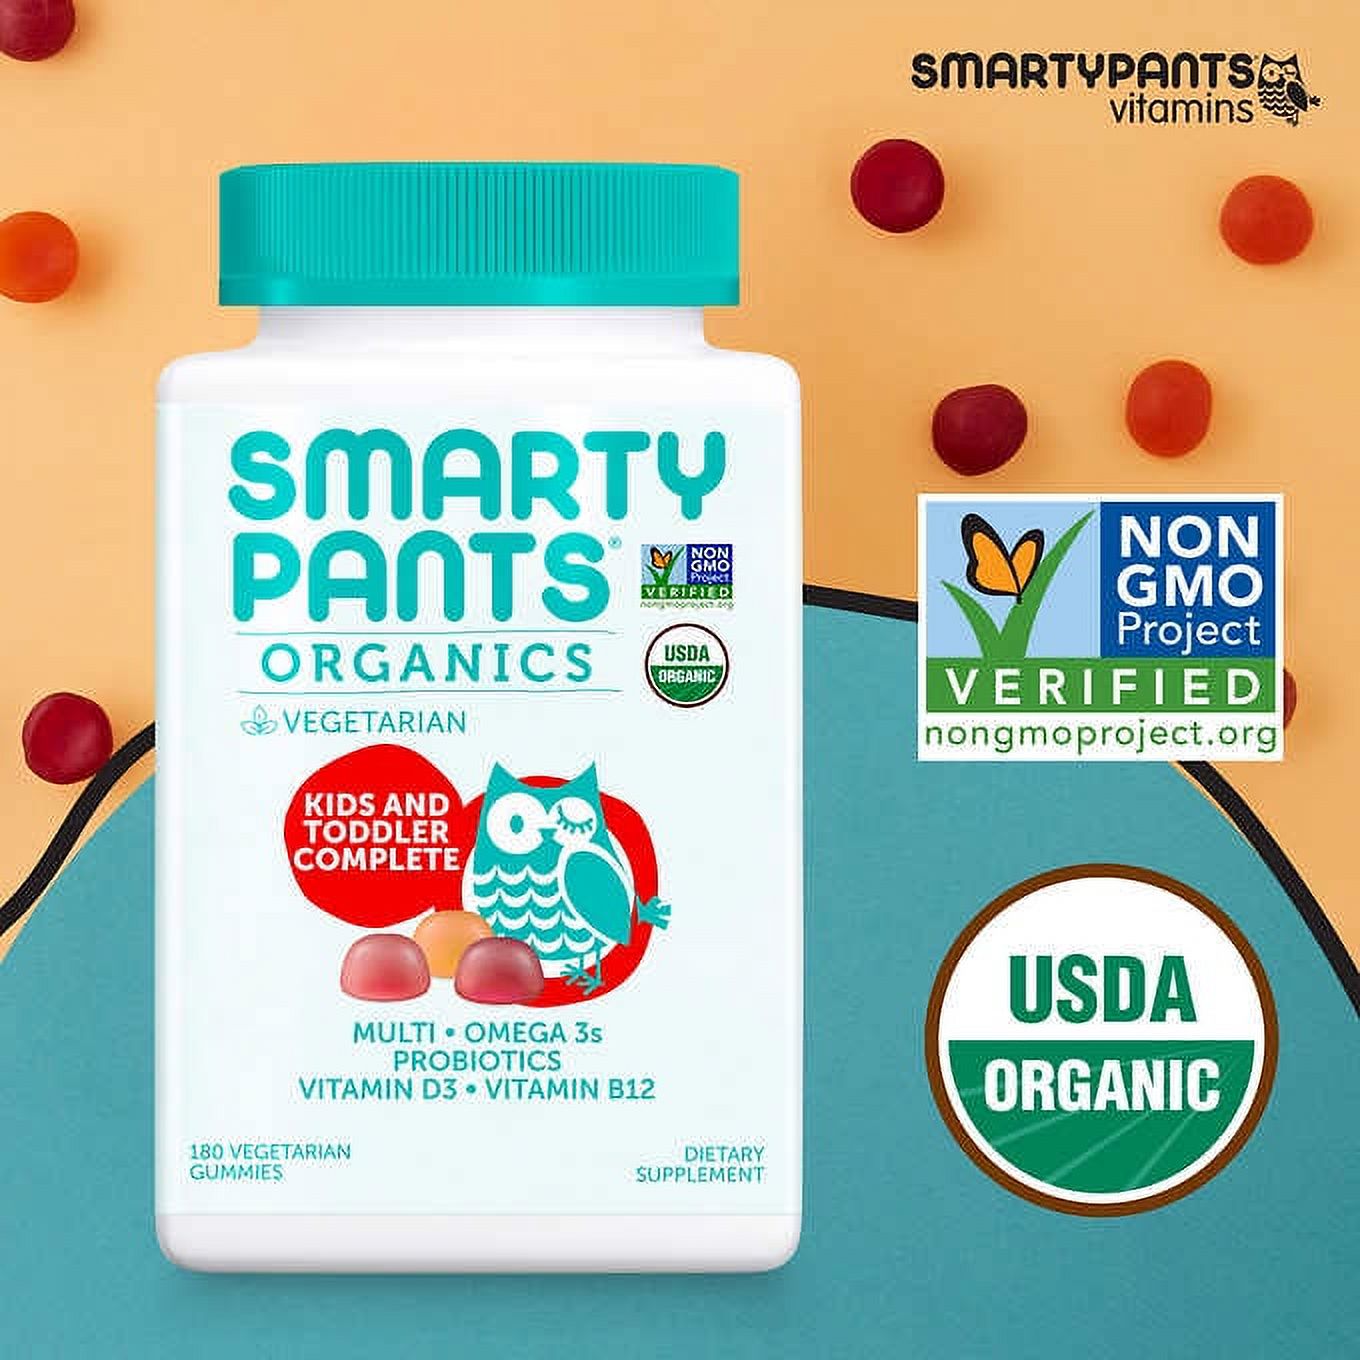 SmartyPants USDA Organic Kids & Toddler Complete Multivitamin, 180 Vegetarian Gummies - image 1 of 2